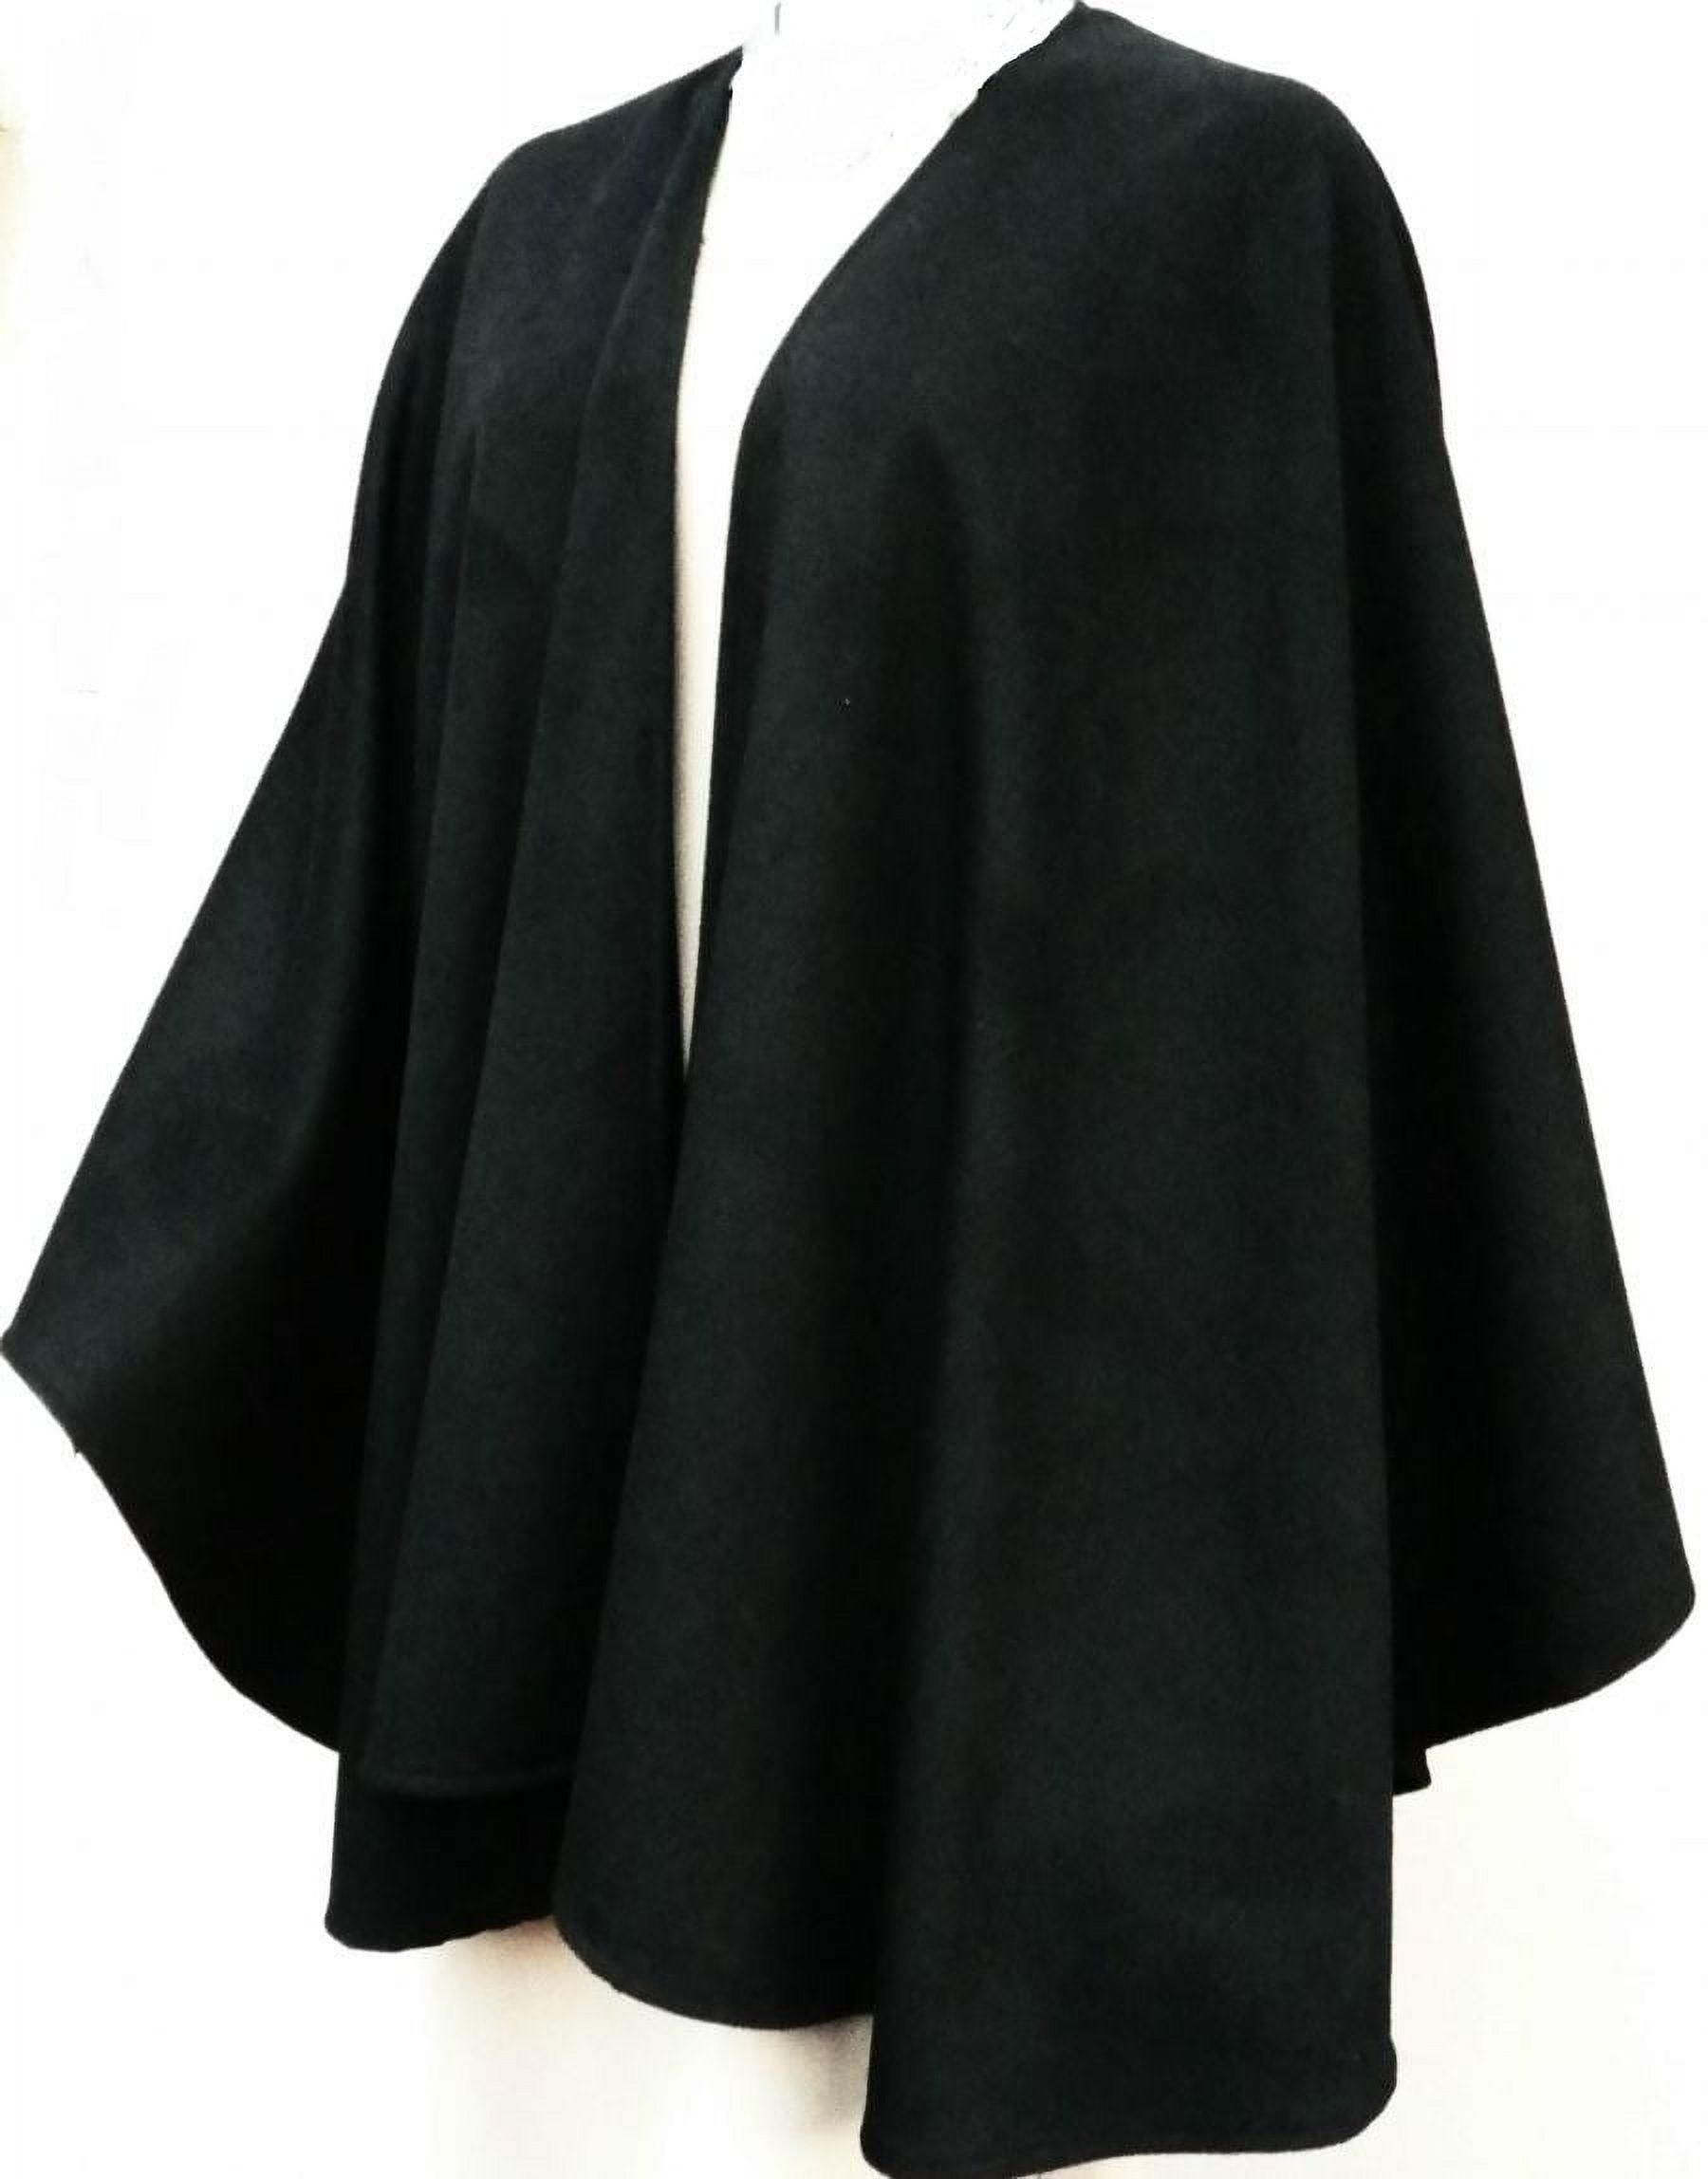 Cashmere Cape with Fur Trim/Cashmere Cape/Cashmere Capes/Cape/Capes/Fur Cape/Fur Capes for women/Capes and Shawls/Fur Caplet/Caplet/Coat/Poncho/Shrug/Ruana (Leather Trim-BLACK) - image 5 of 15